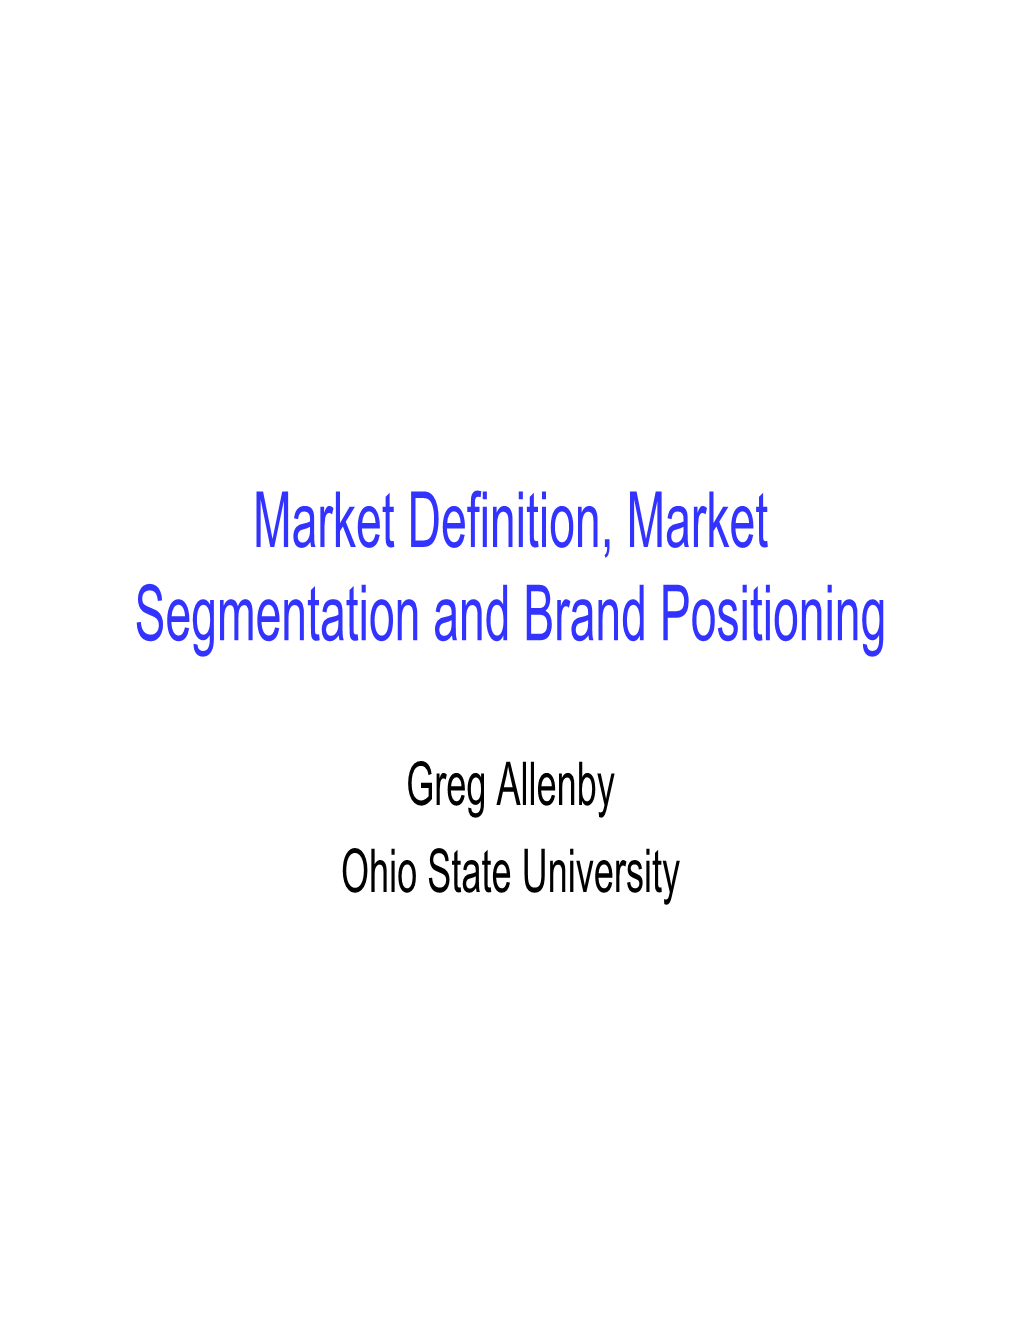 Market Definition, Market Segmentation and Brand Positioning